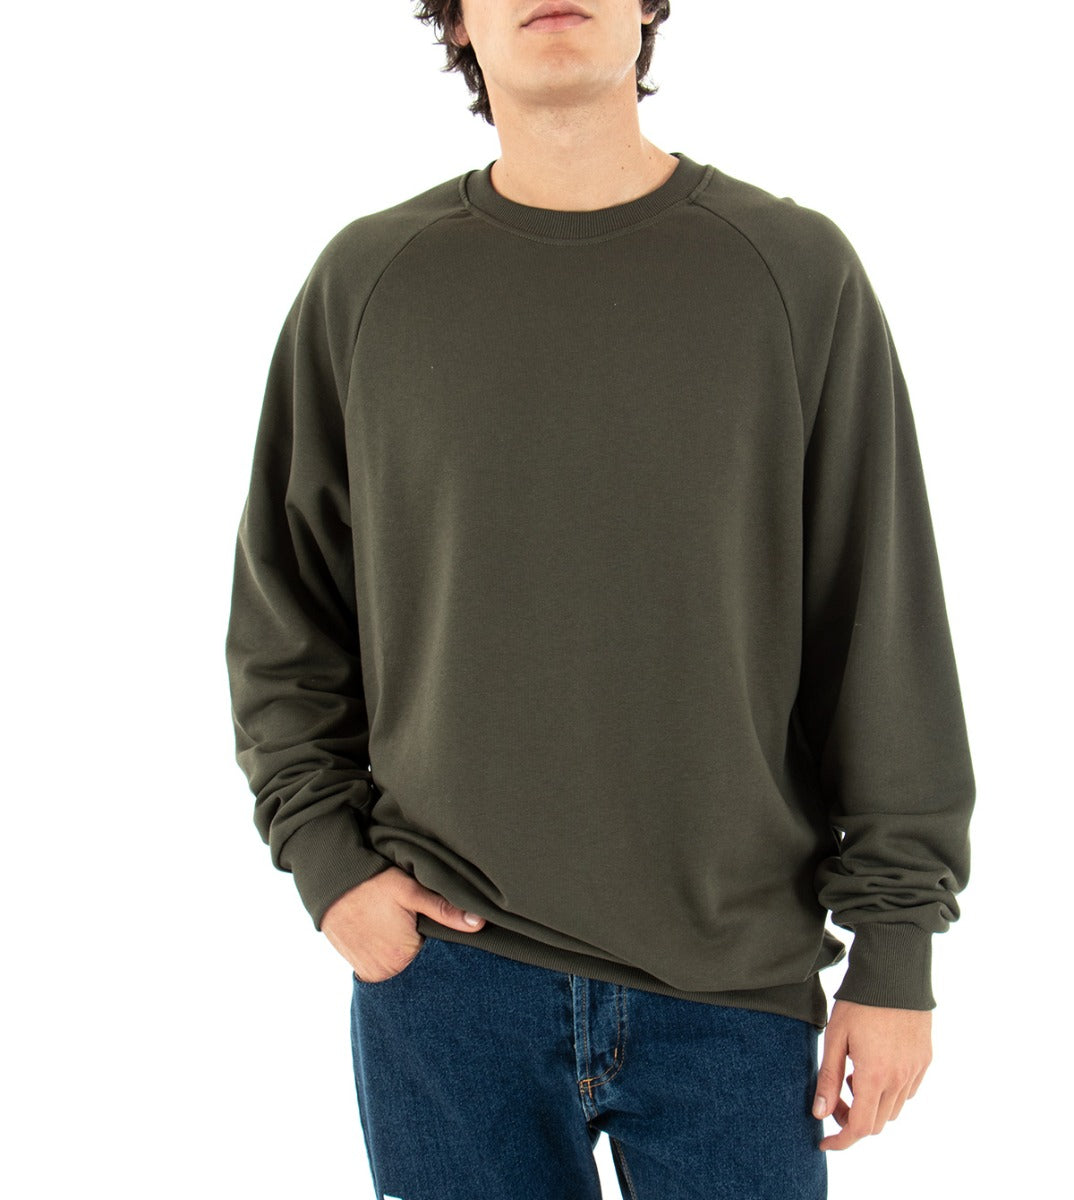 Men's White Crewneck Sweatshirt Solid Color Green Oversize Sweatshirt GIOSAL-F2731A